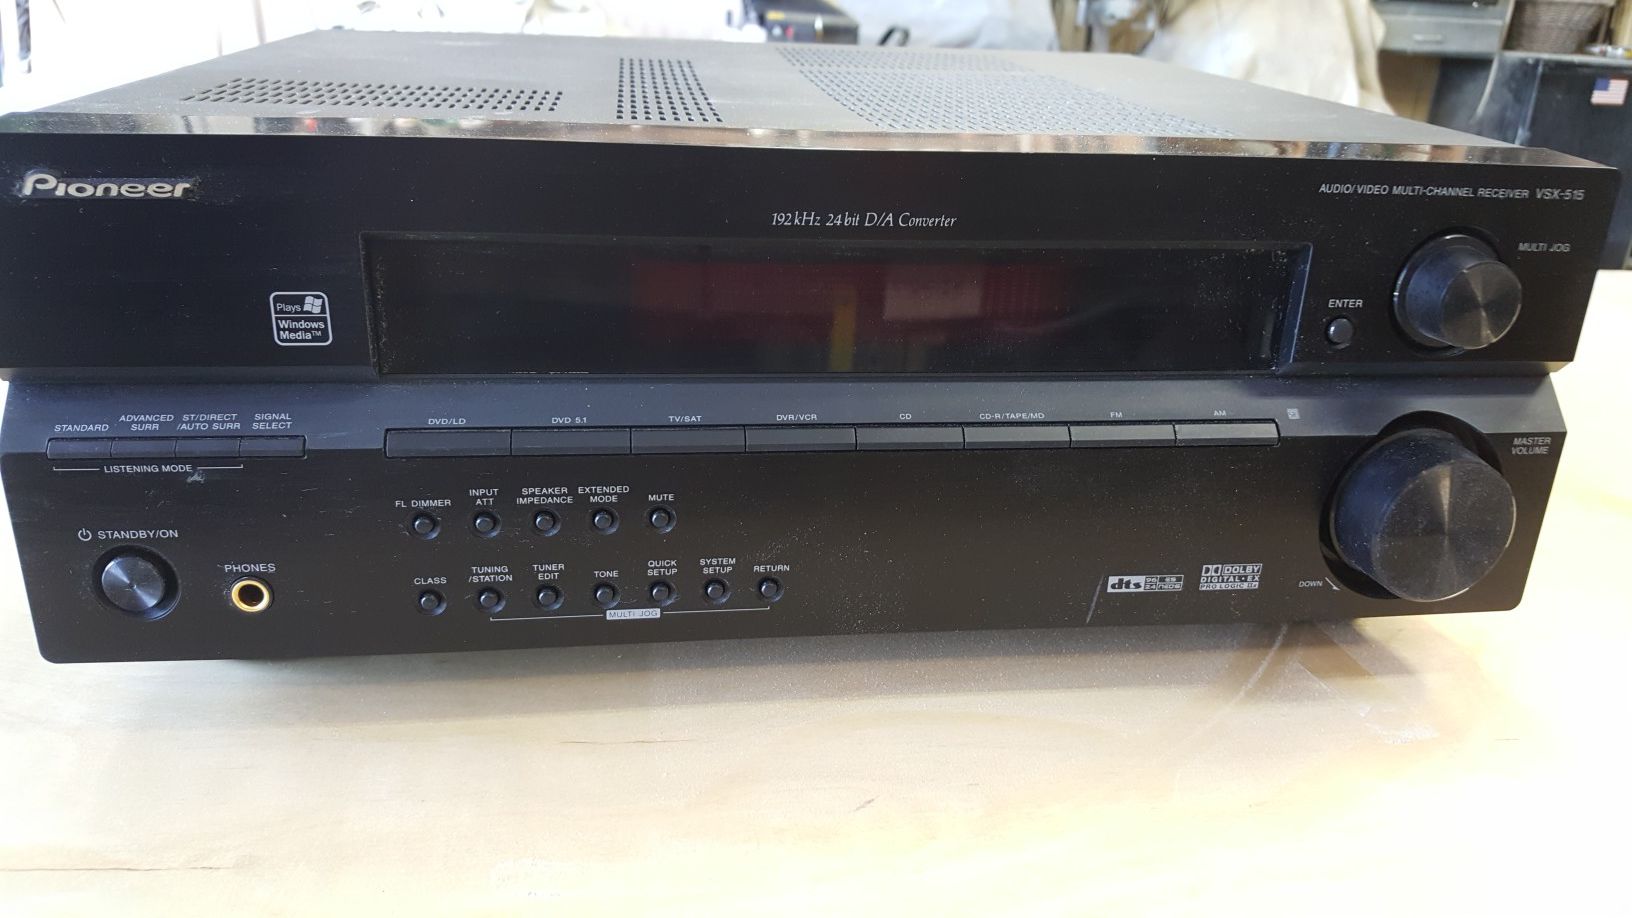 Pioneer 7.1 audio-video receiver